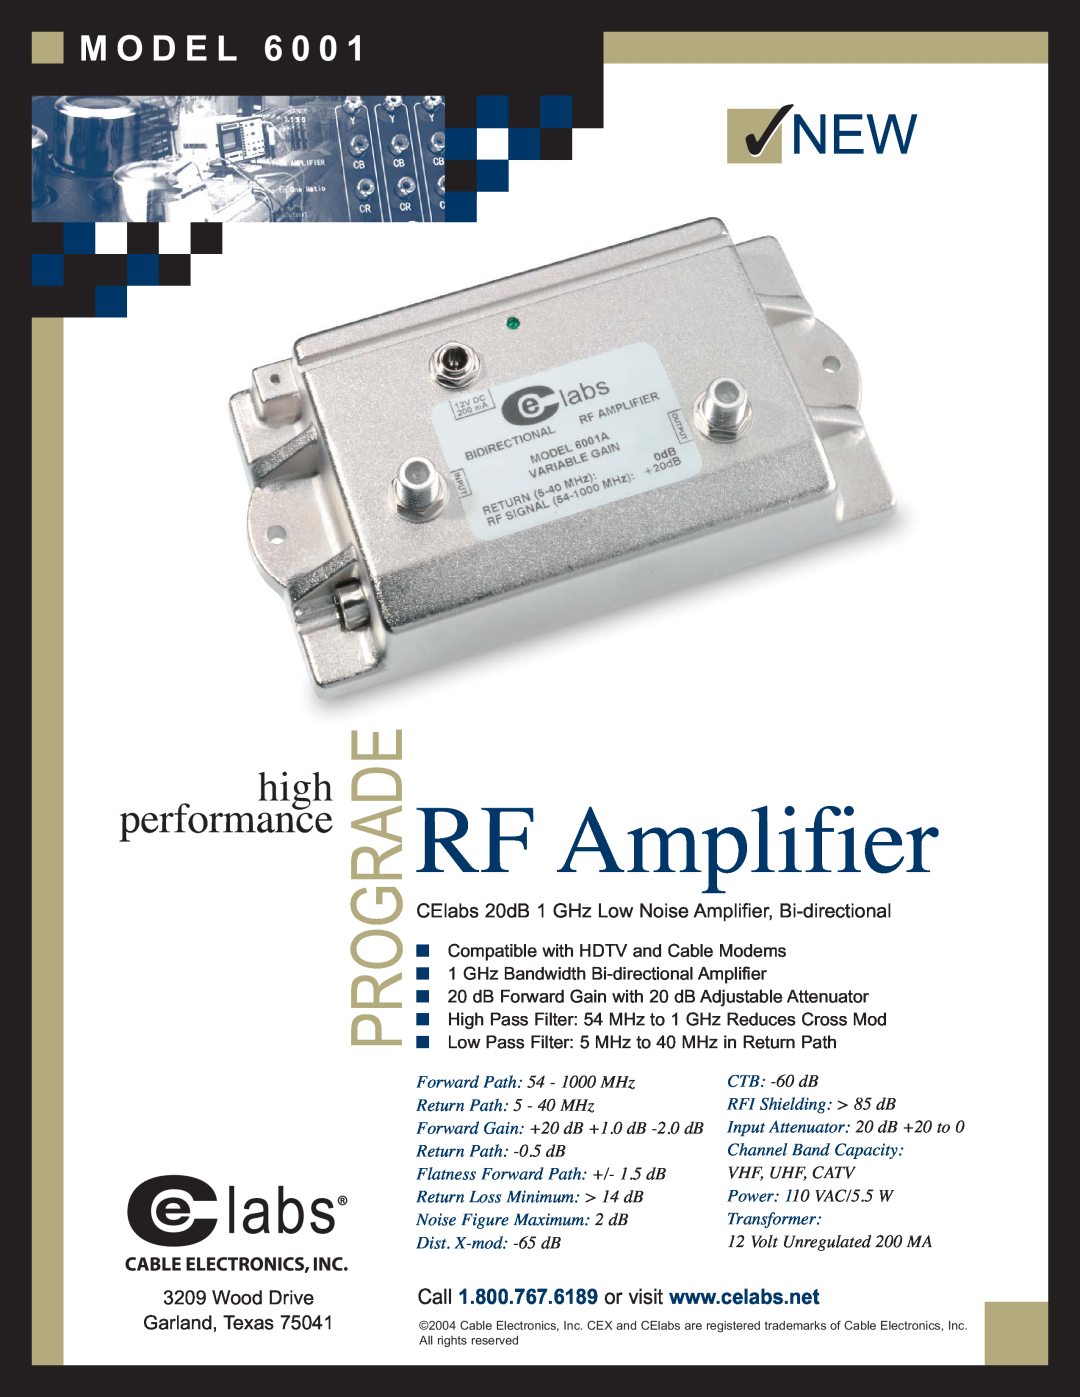 Cable Electronics 6001 manual RF Amplifier, Prograde, high performance, M O D E L 6, Wood Drive, Garland, Texas, CTB -60dB 